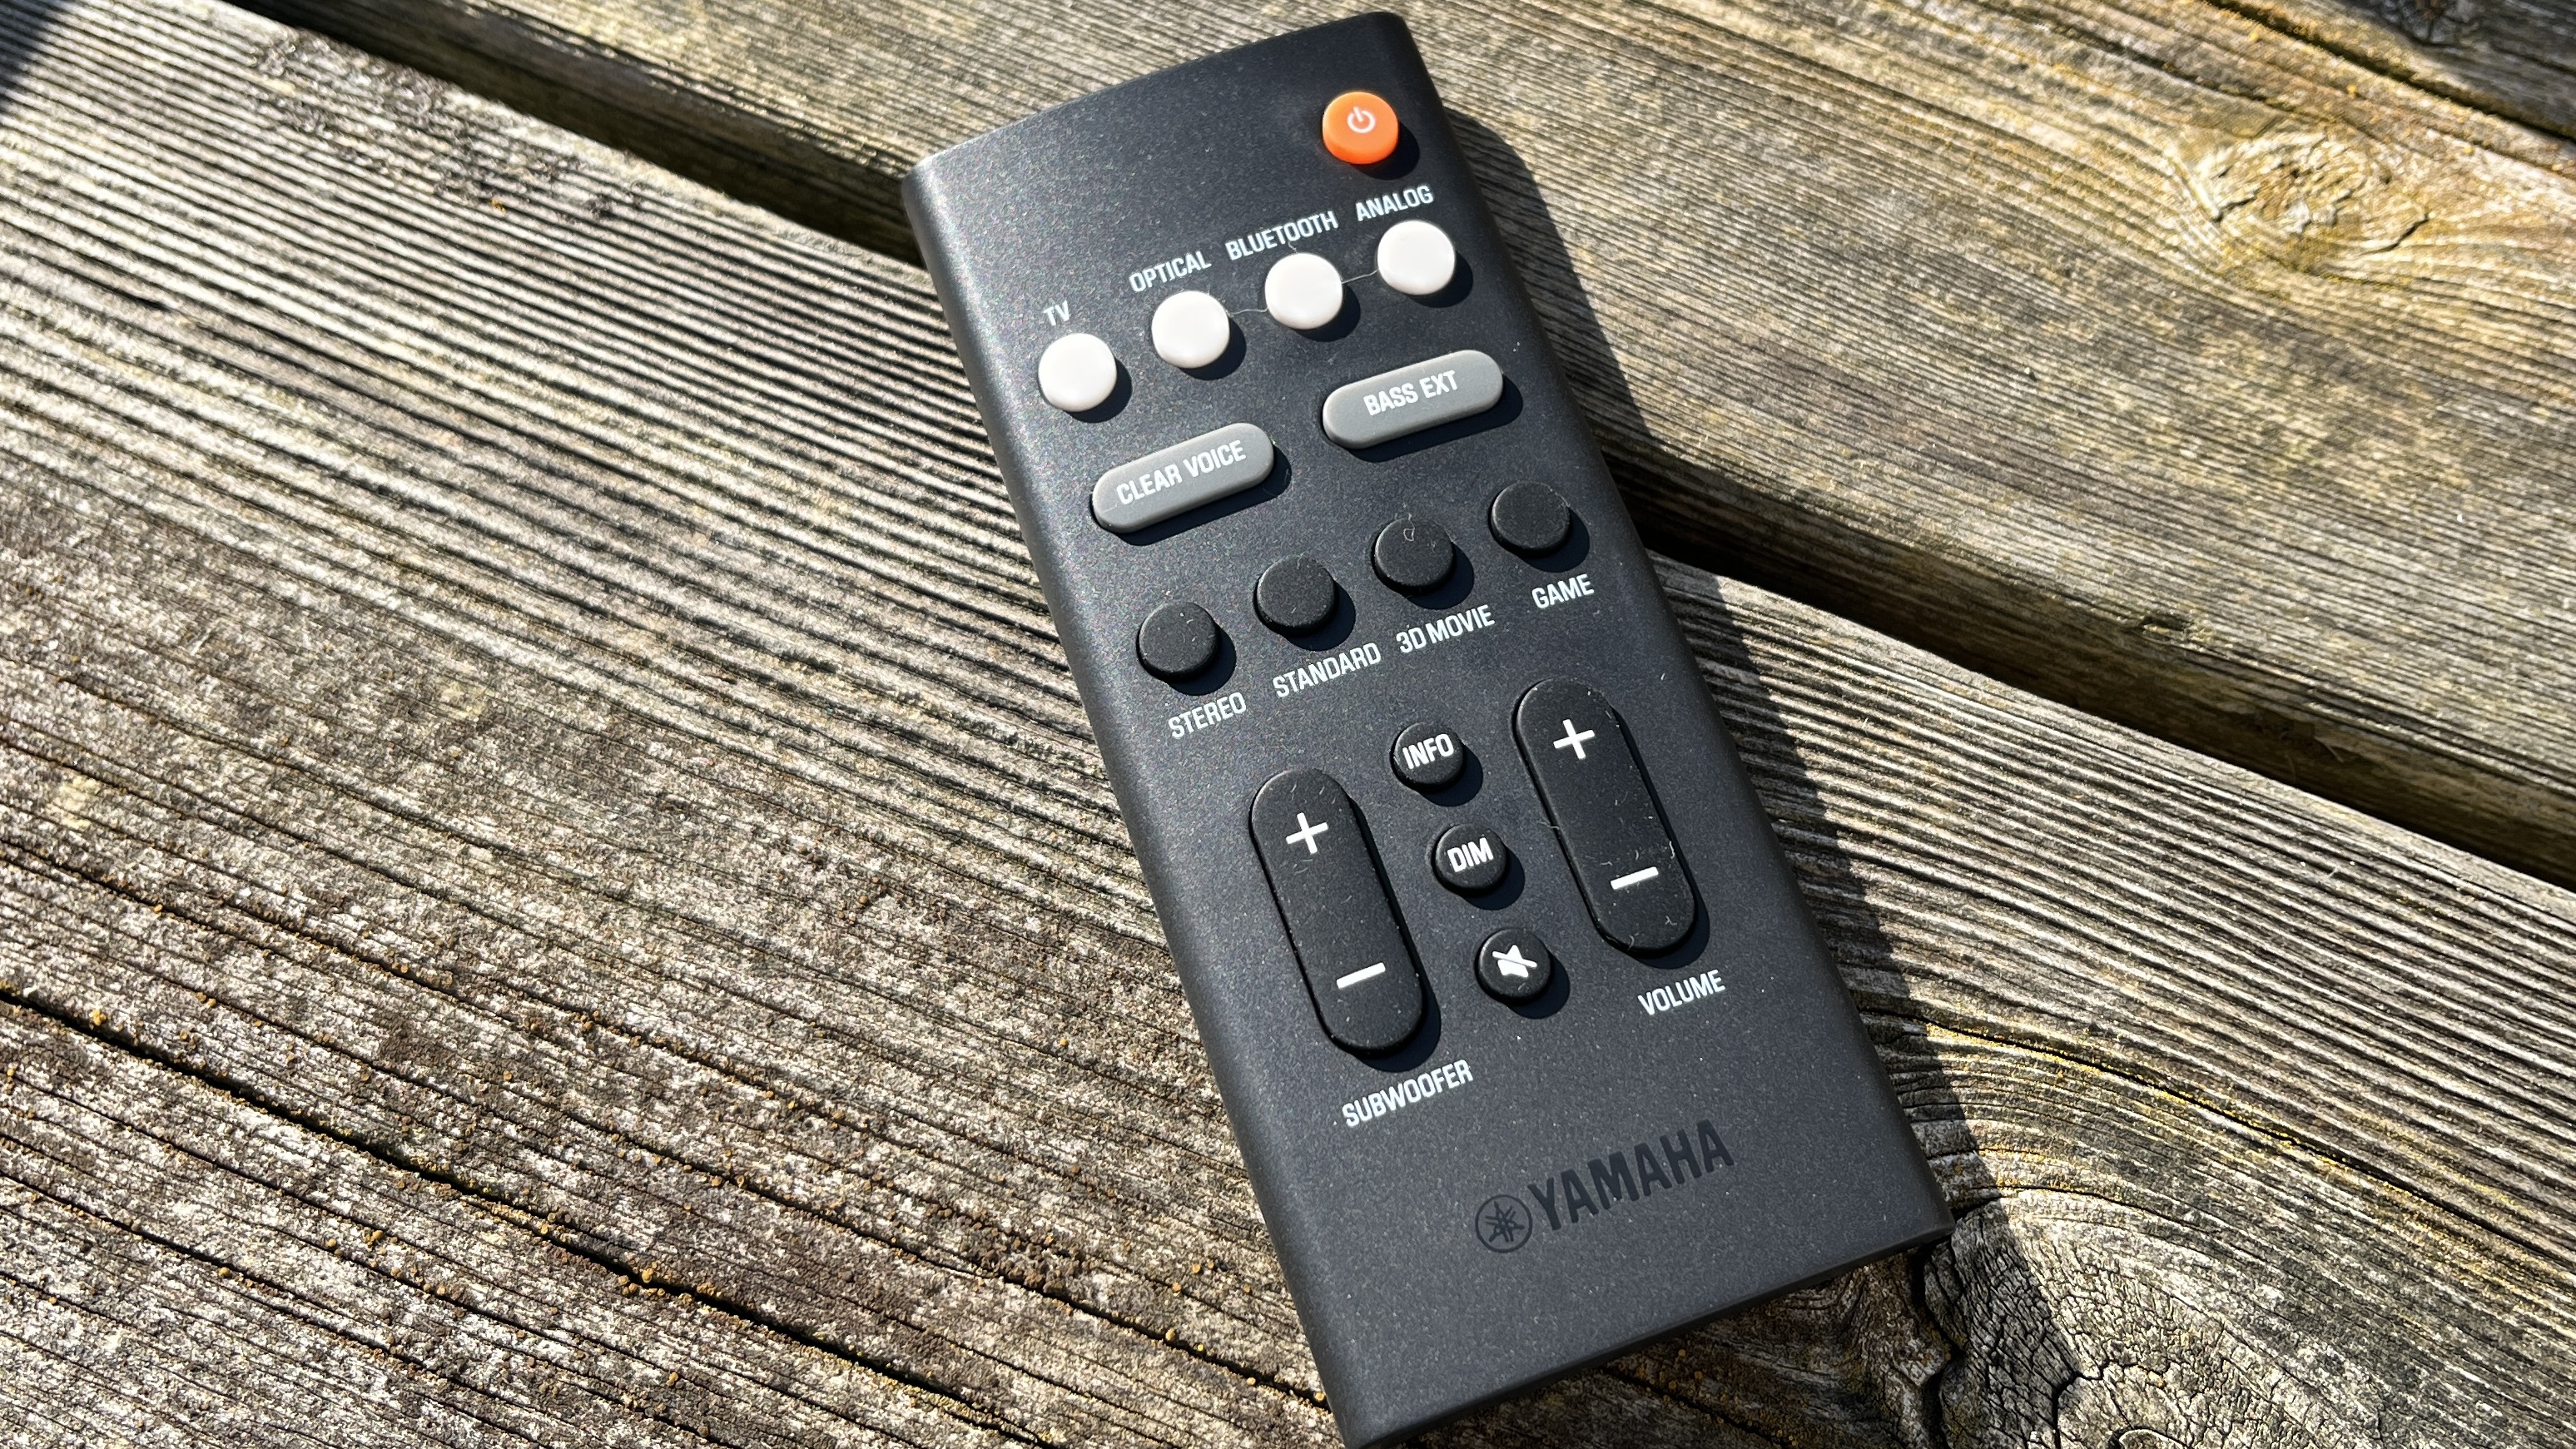 The Yamaha SR-C30A soundbar's remote